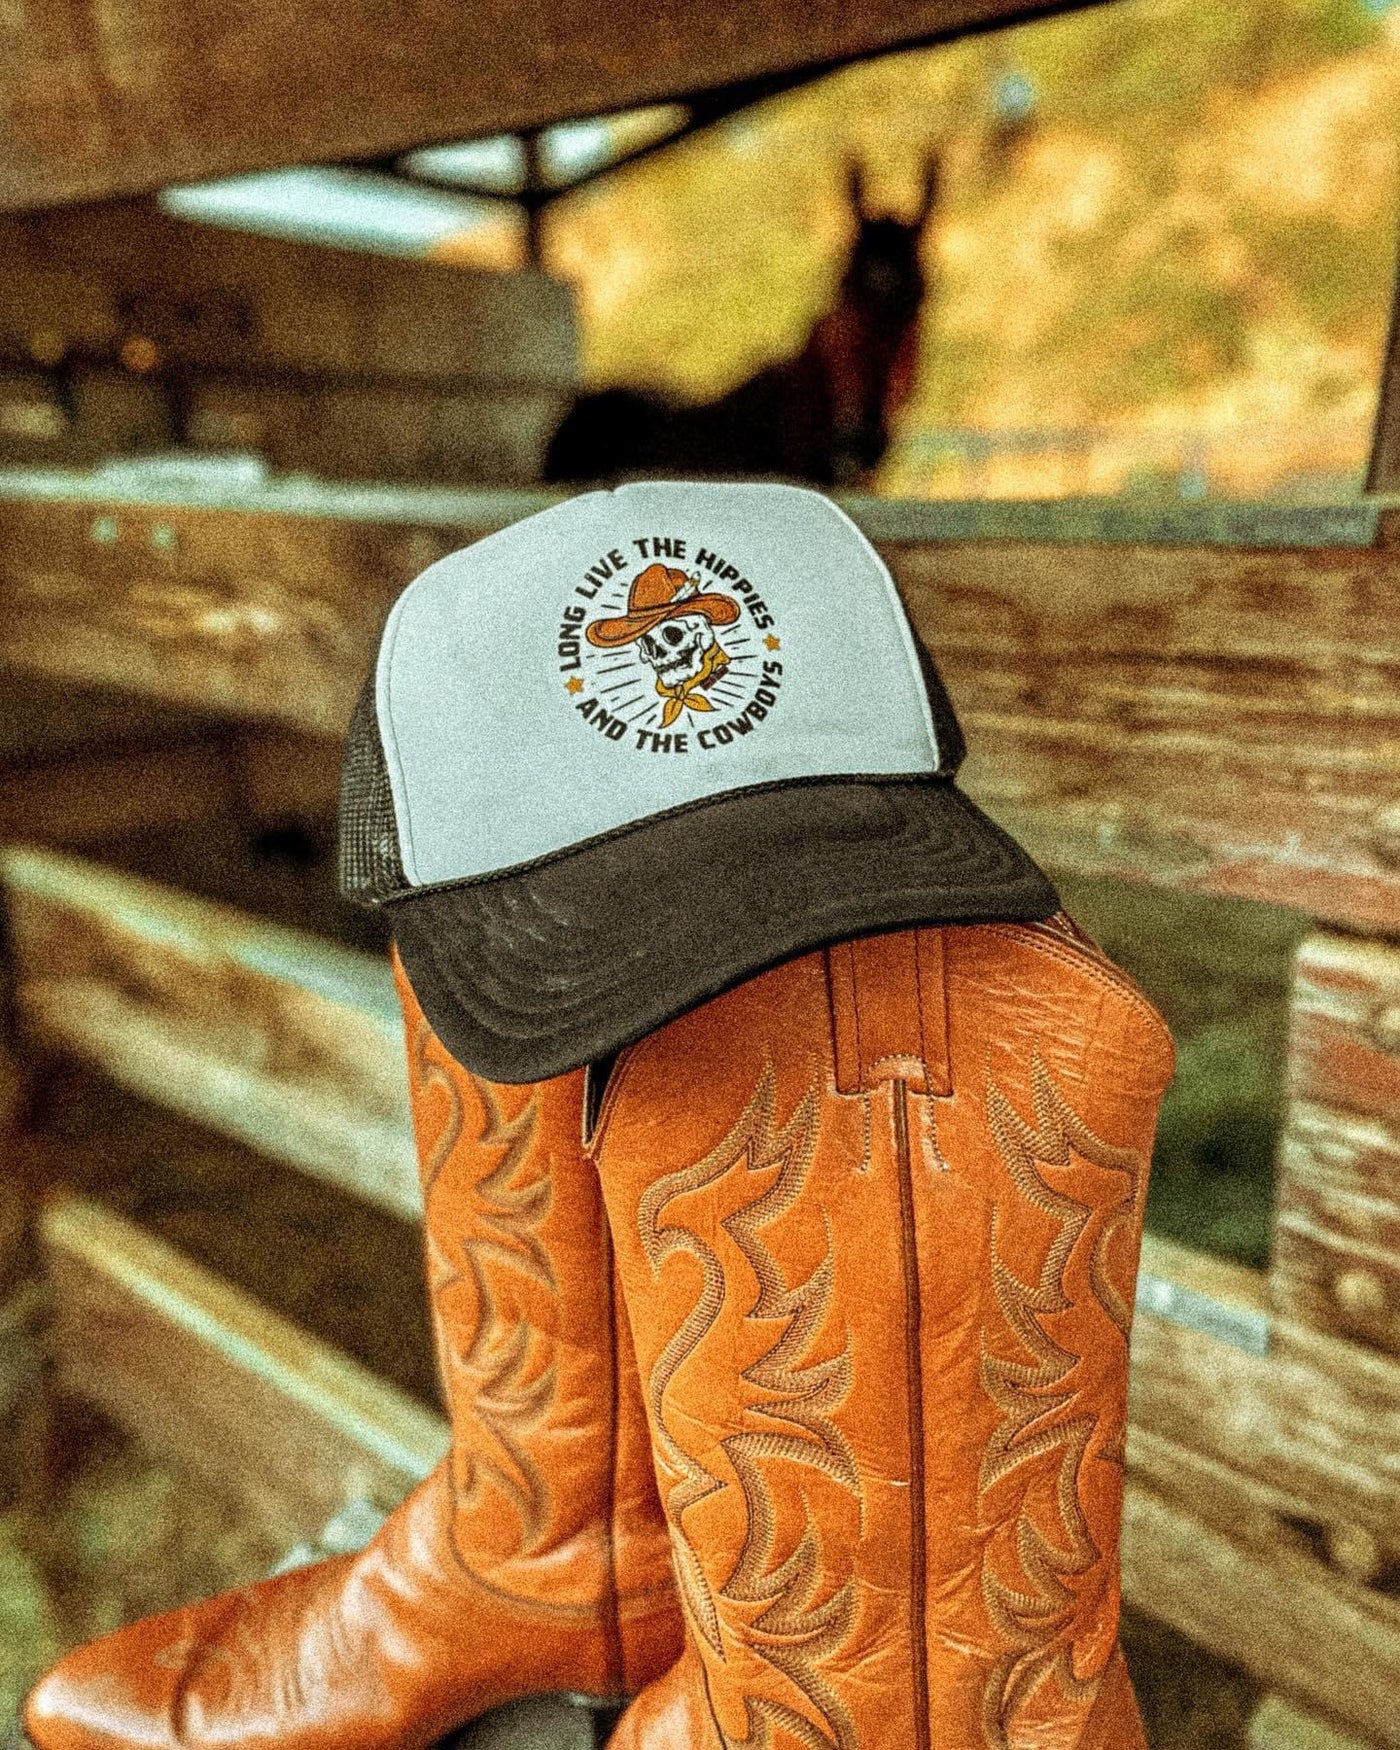 Hippies & Cowboys Trucker Hat